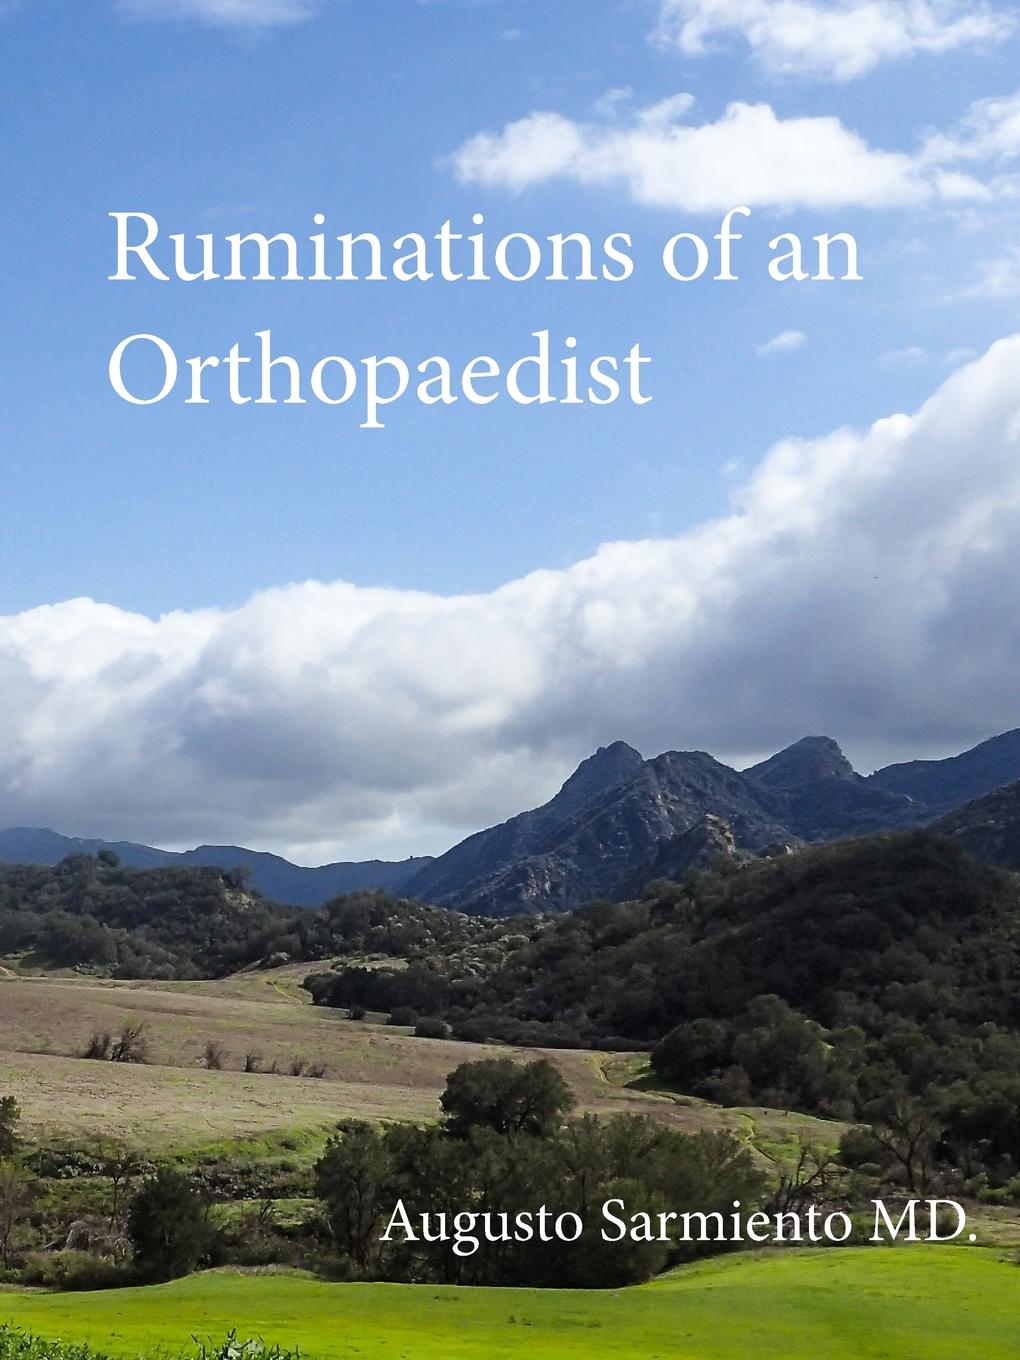 augusto sarmiento Ruminations of an Orthopaedist